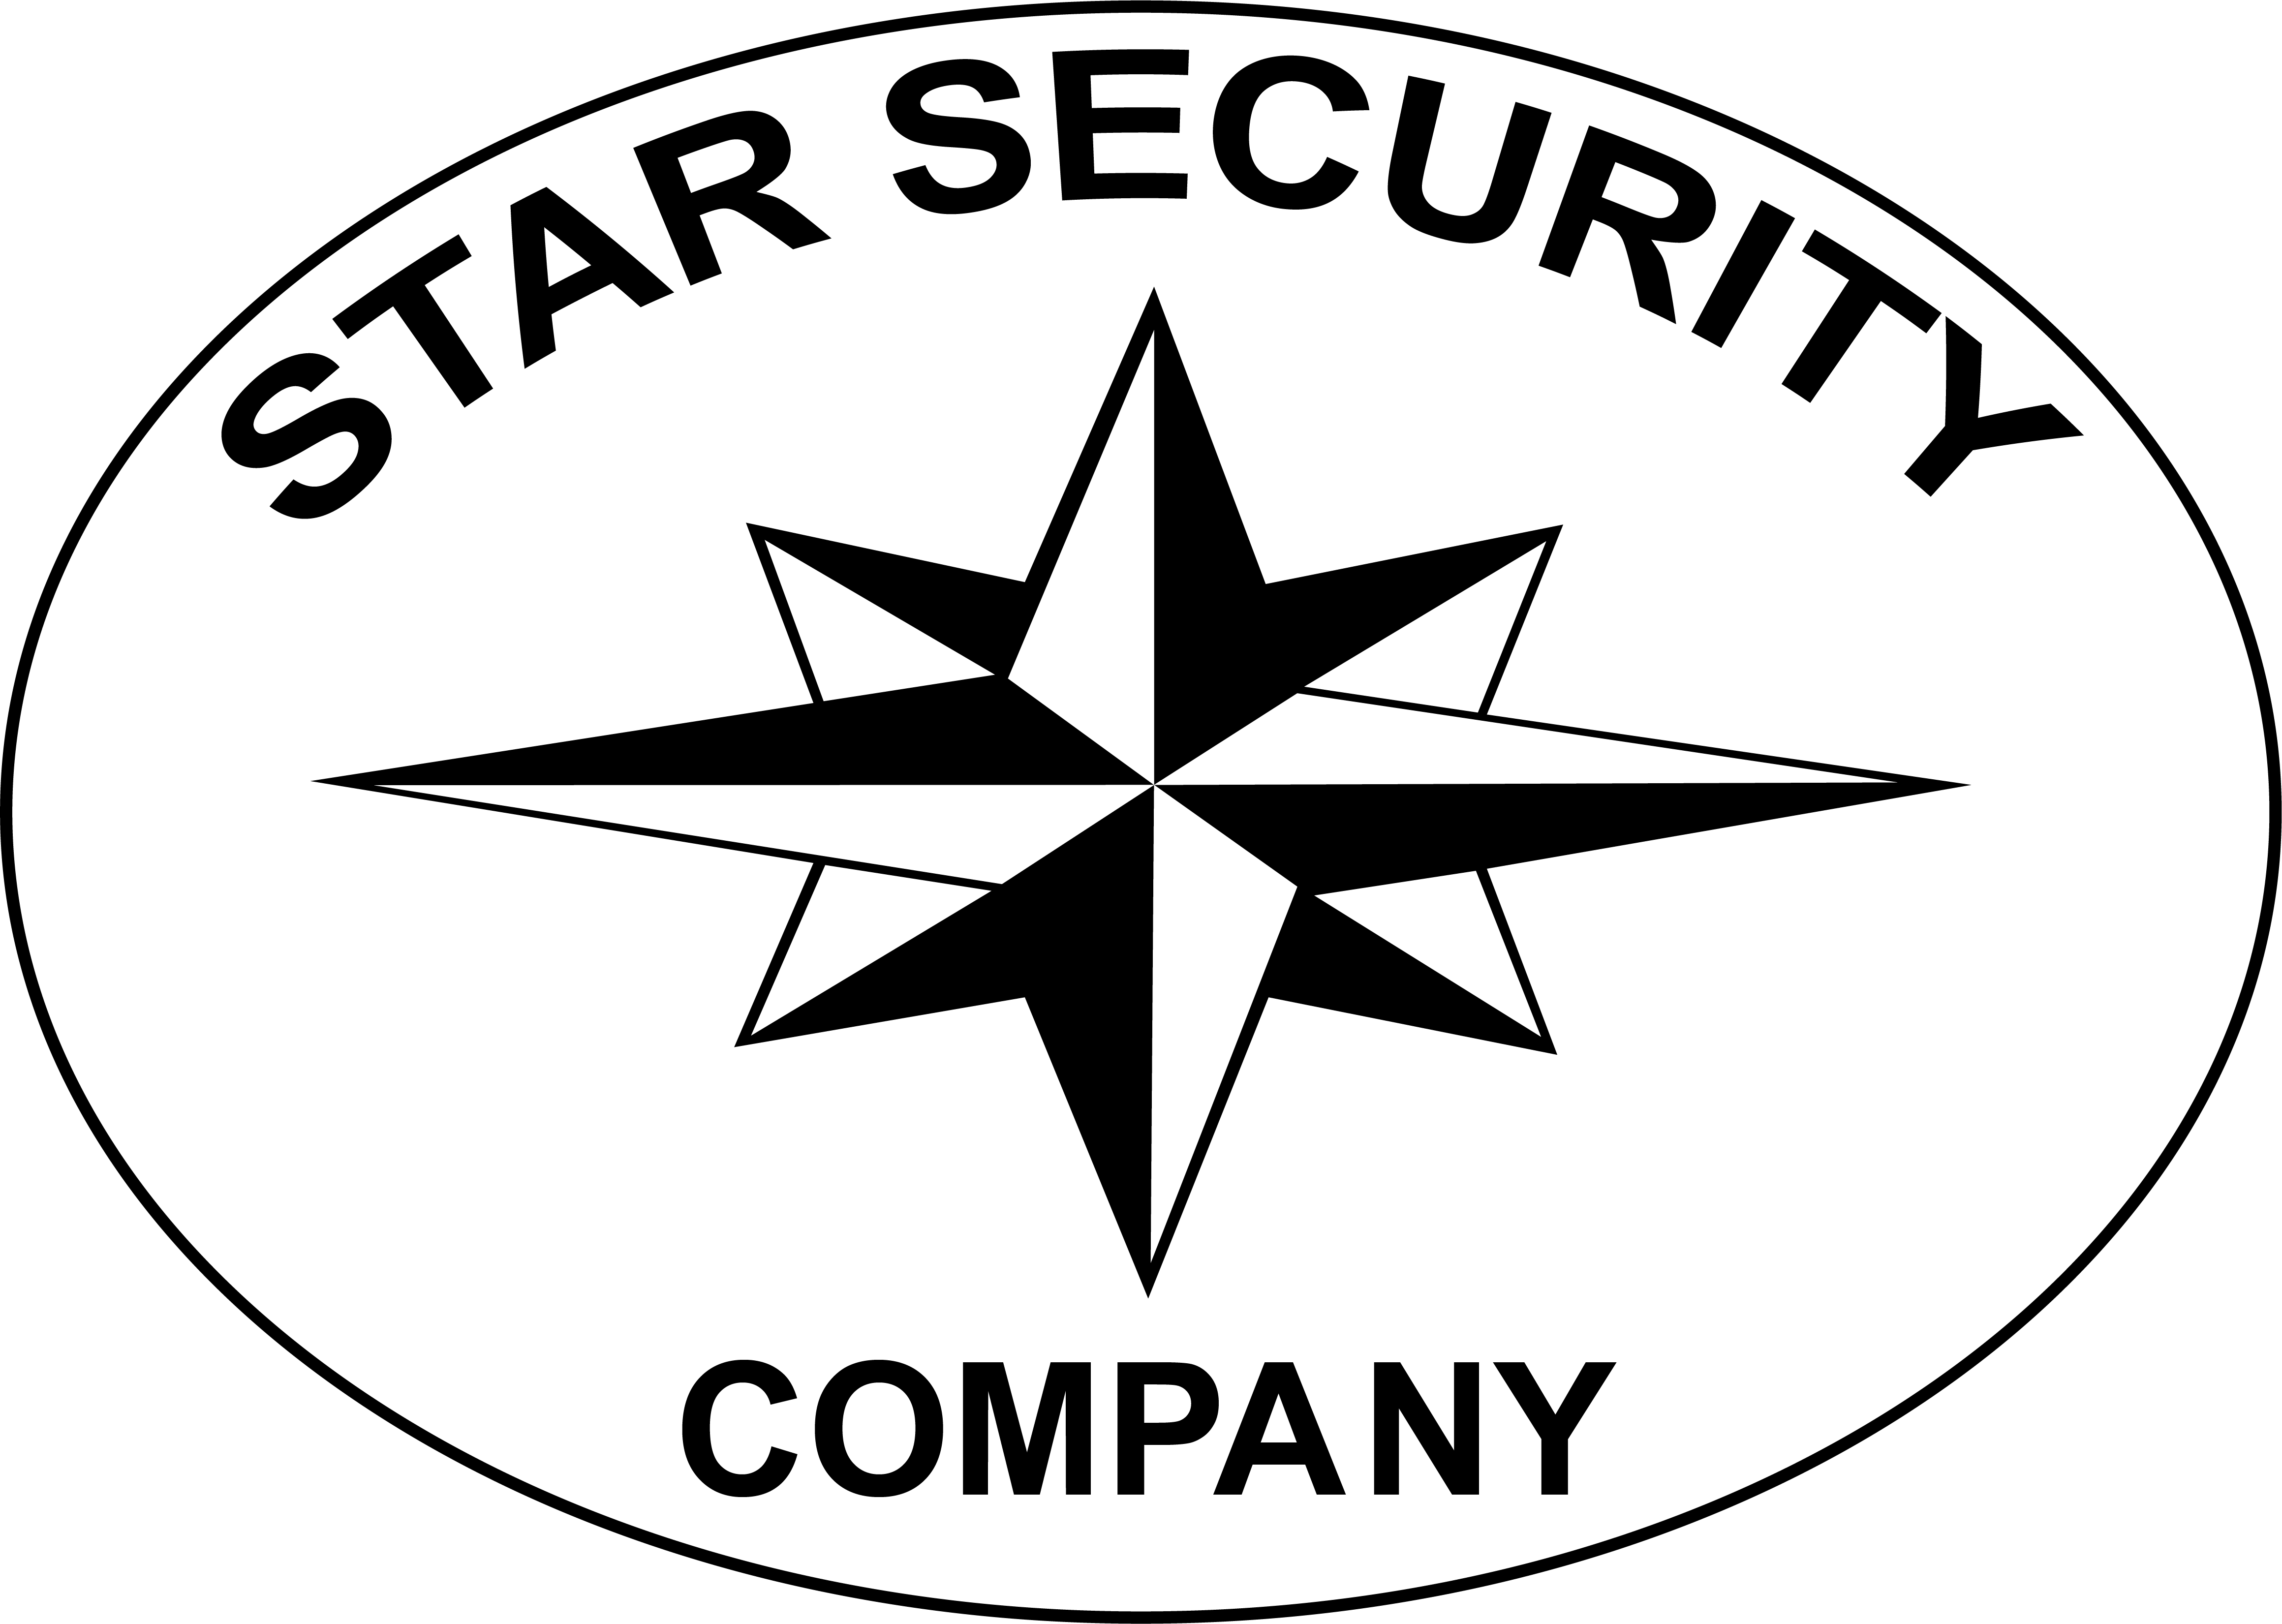 STAR SECURITY COMPANY